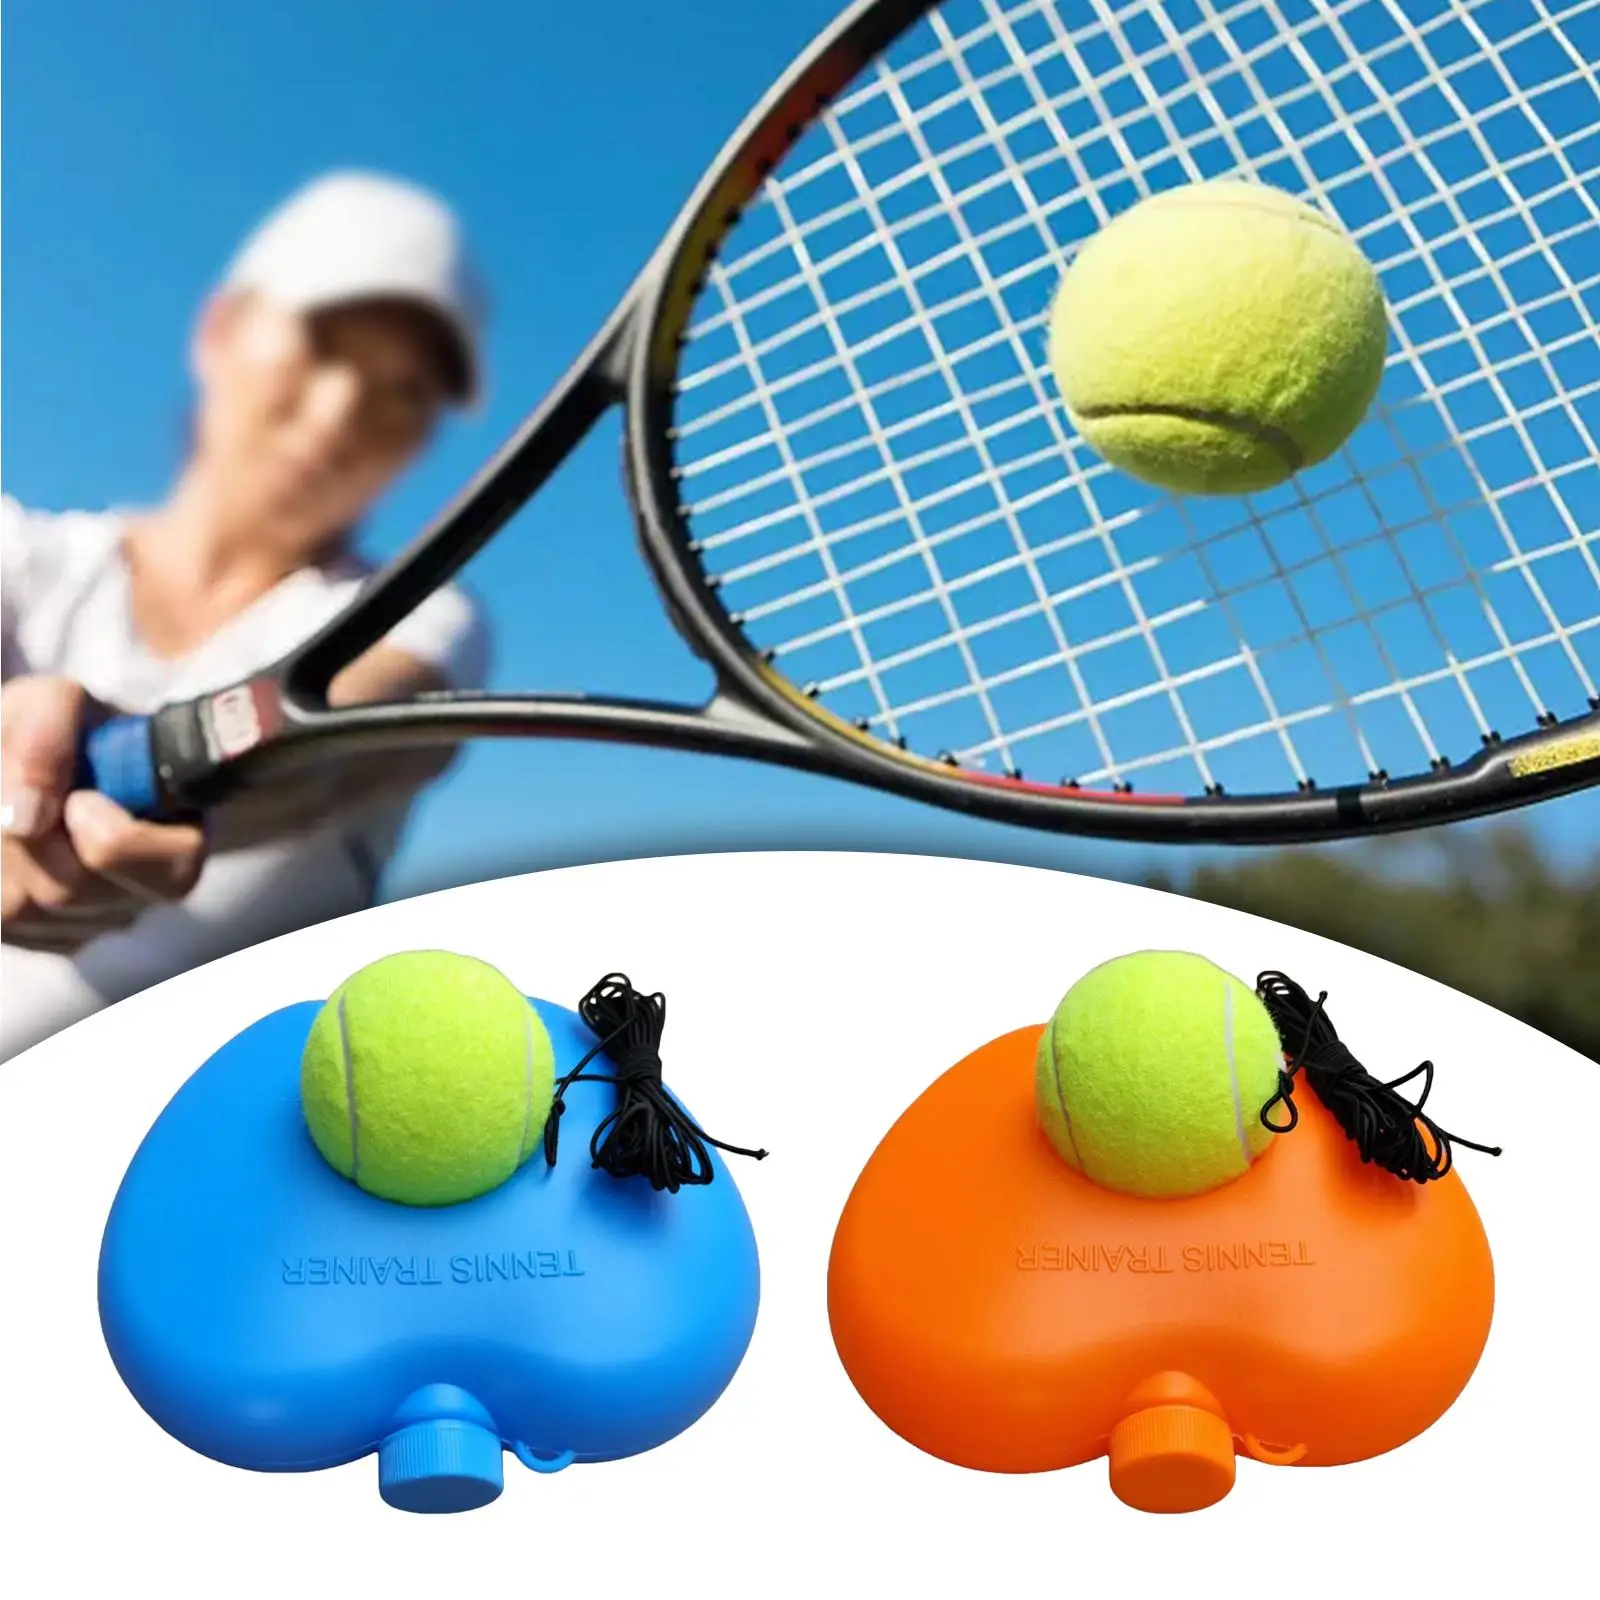 Singles Tennis Trainer with Tennis Ball,Tennis Training Equipment,Self Practice